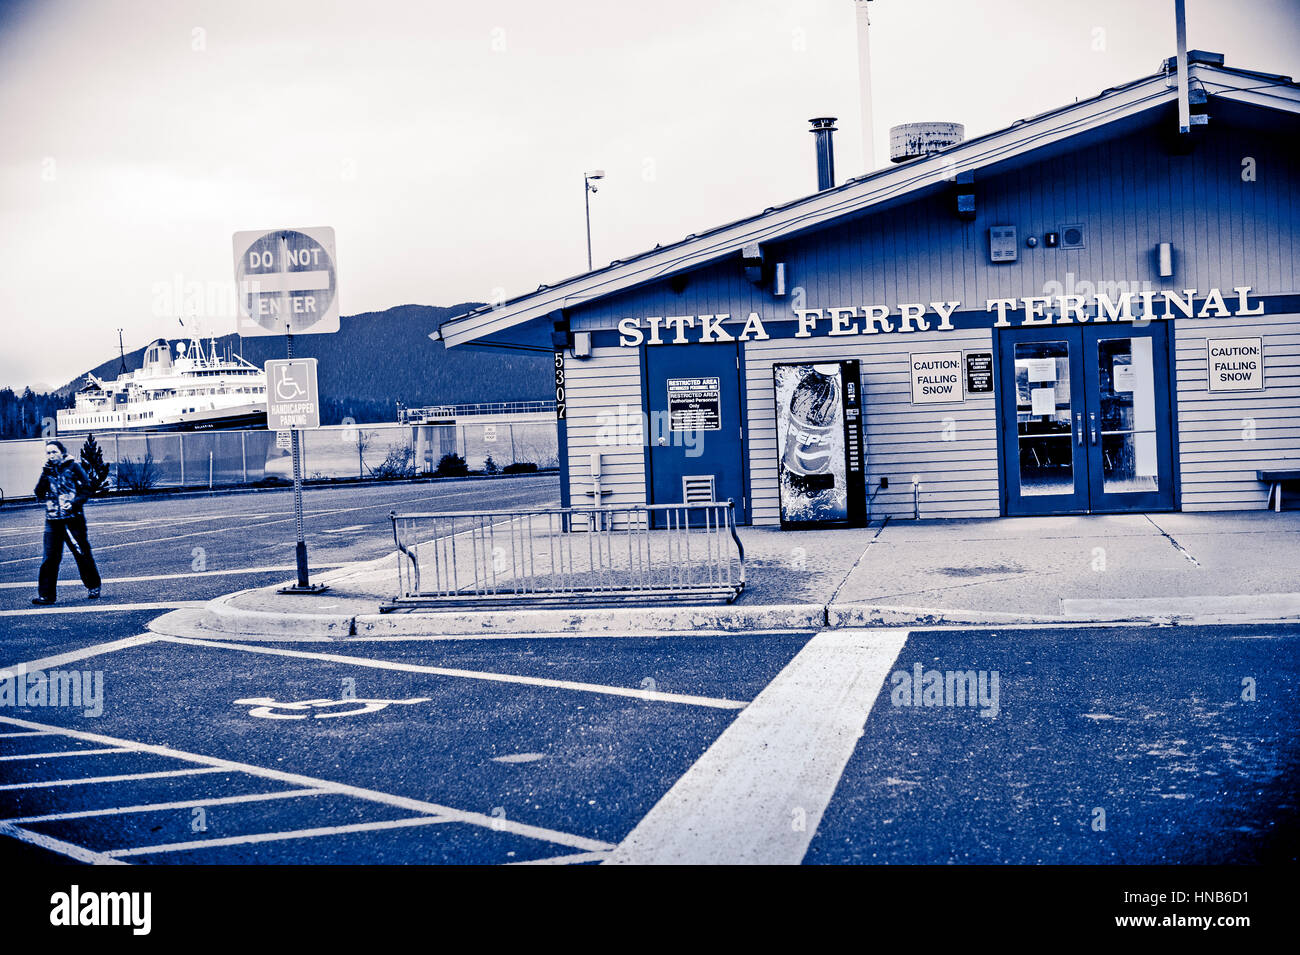 Alaska Marine Highway ferry terminal, porto di Sitka, Alaska, Stati Uniti d'America. Fotografia di Jeffrey Wickett, NorthLight fotografia. https://northlight.blog Foto Stock